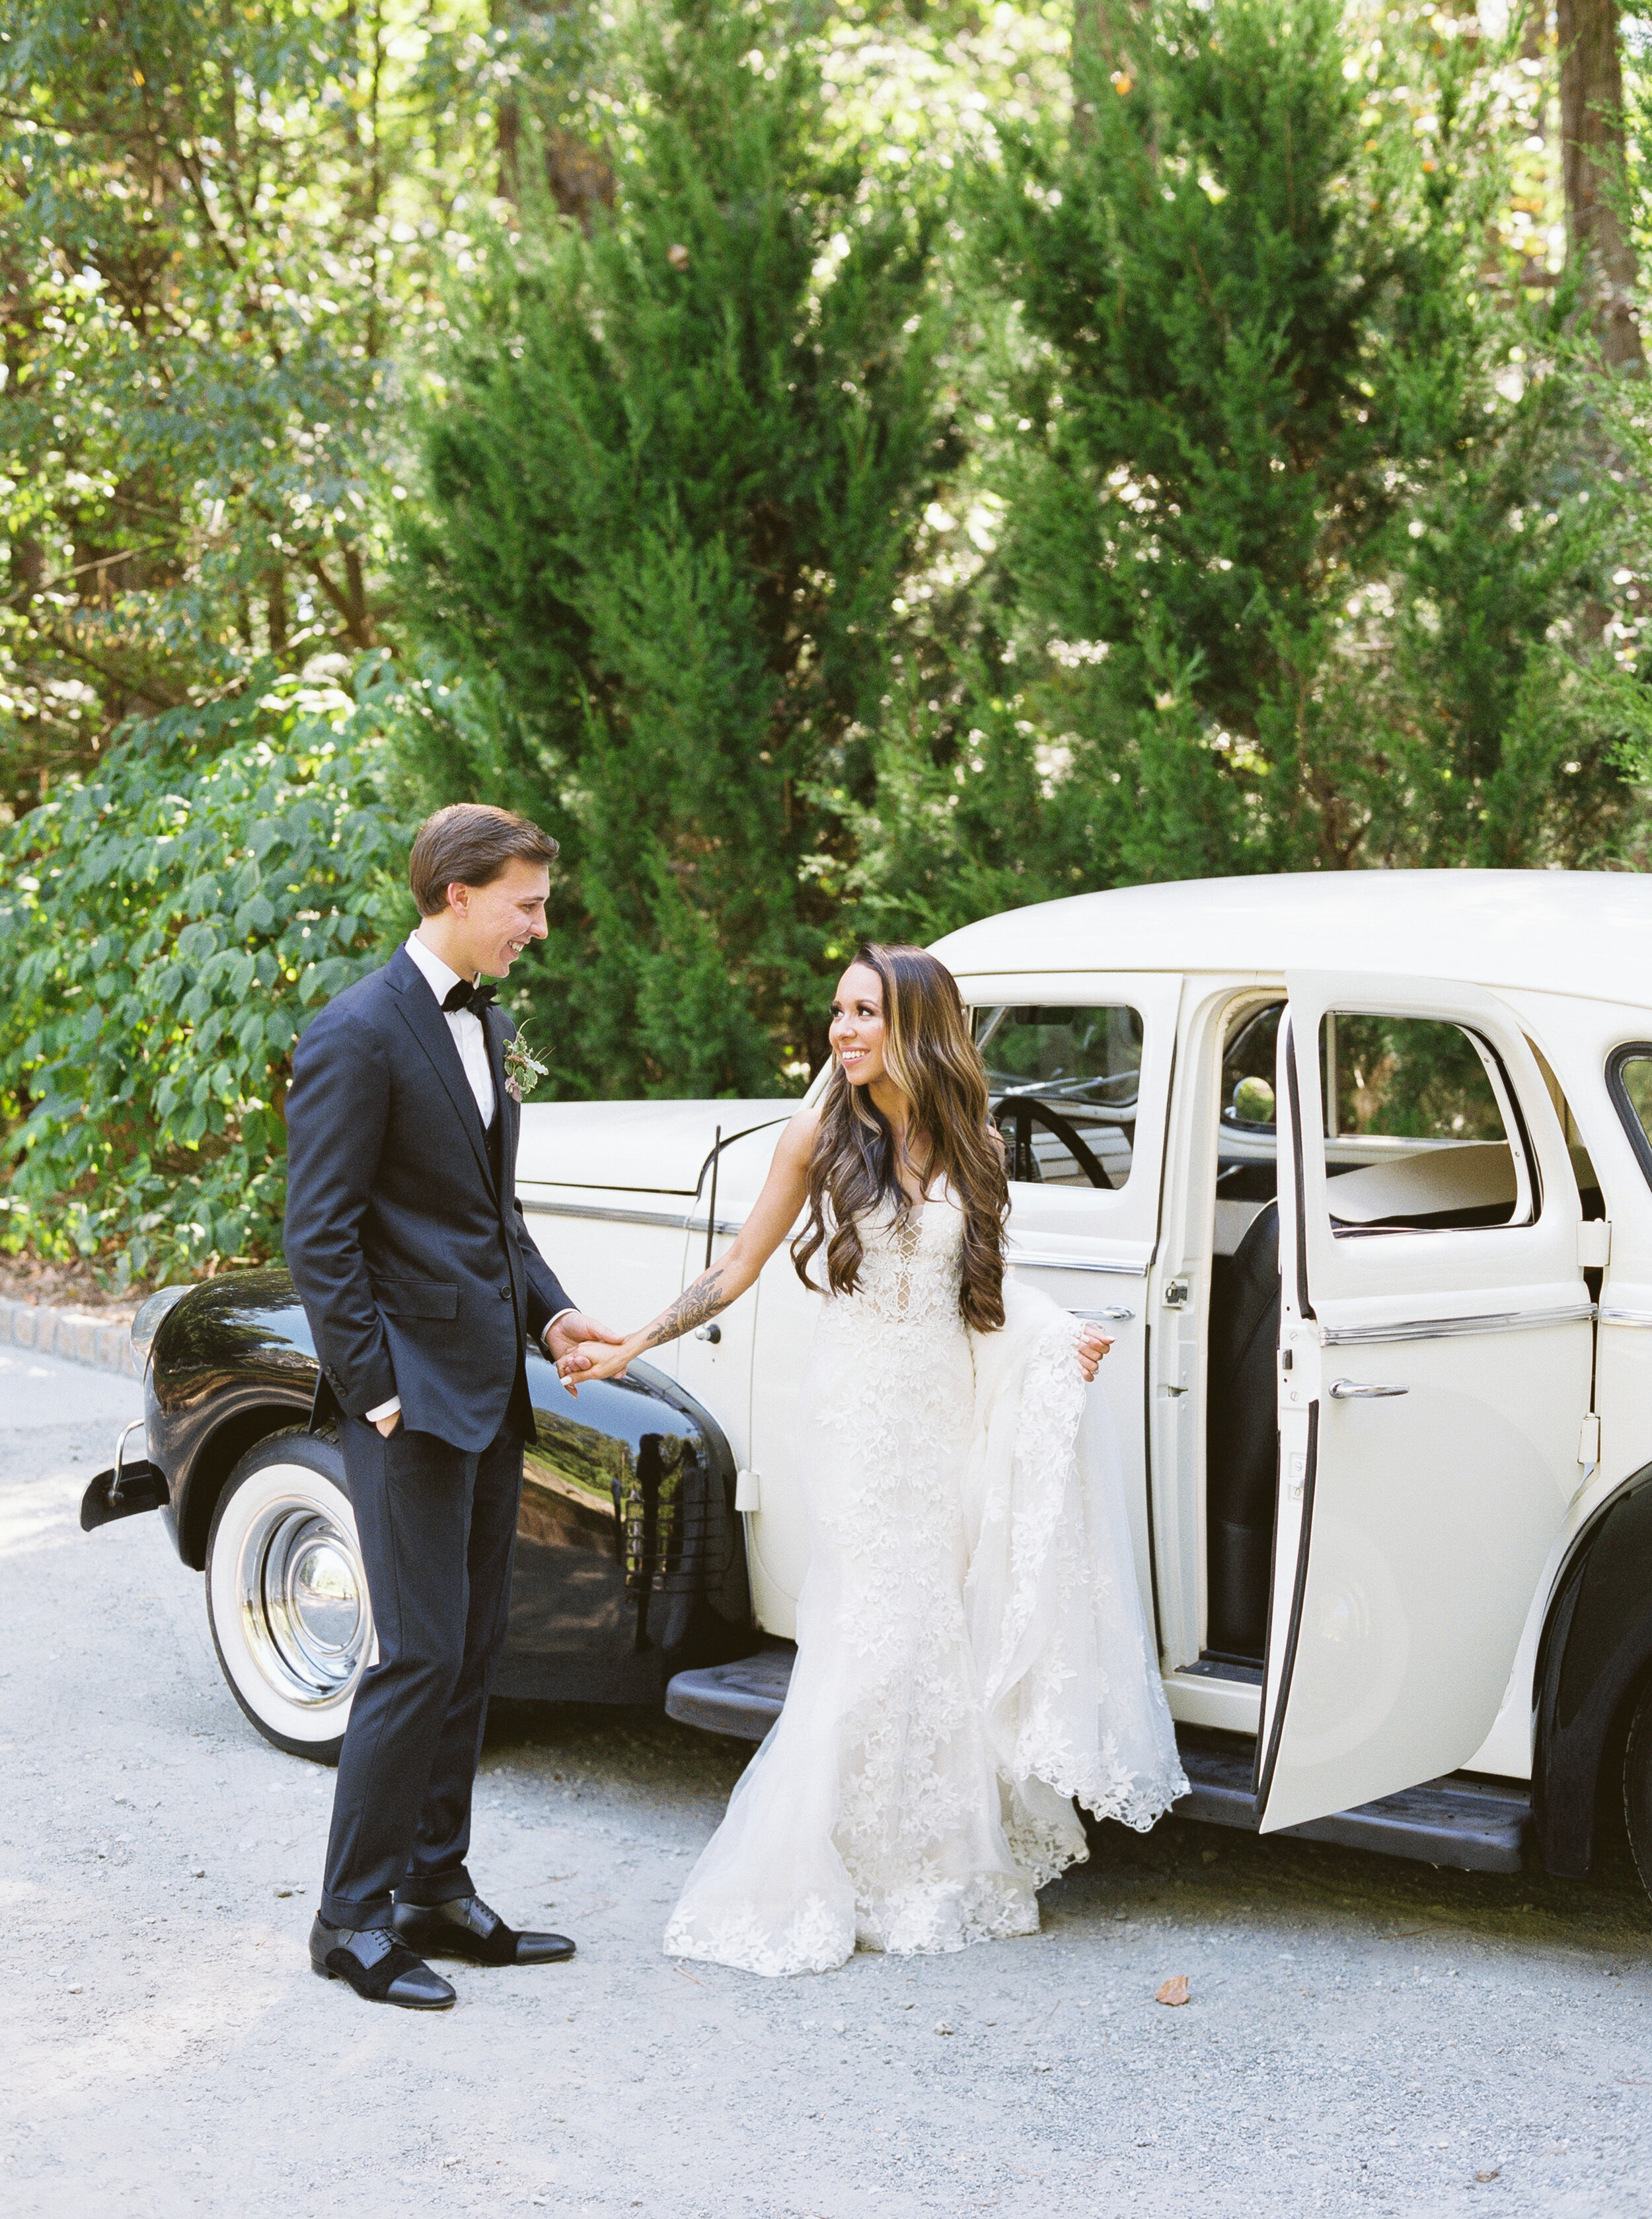 Jessica Gold Photography | Simply Charming Socials | Atlanta Wedding Planner